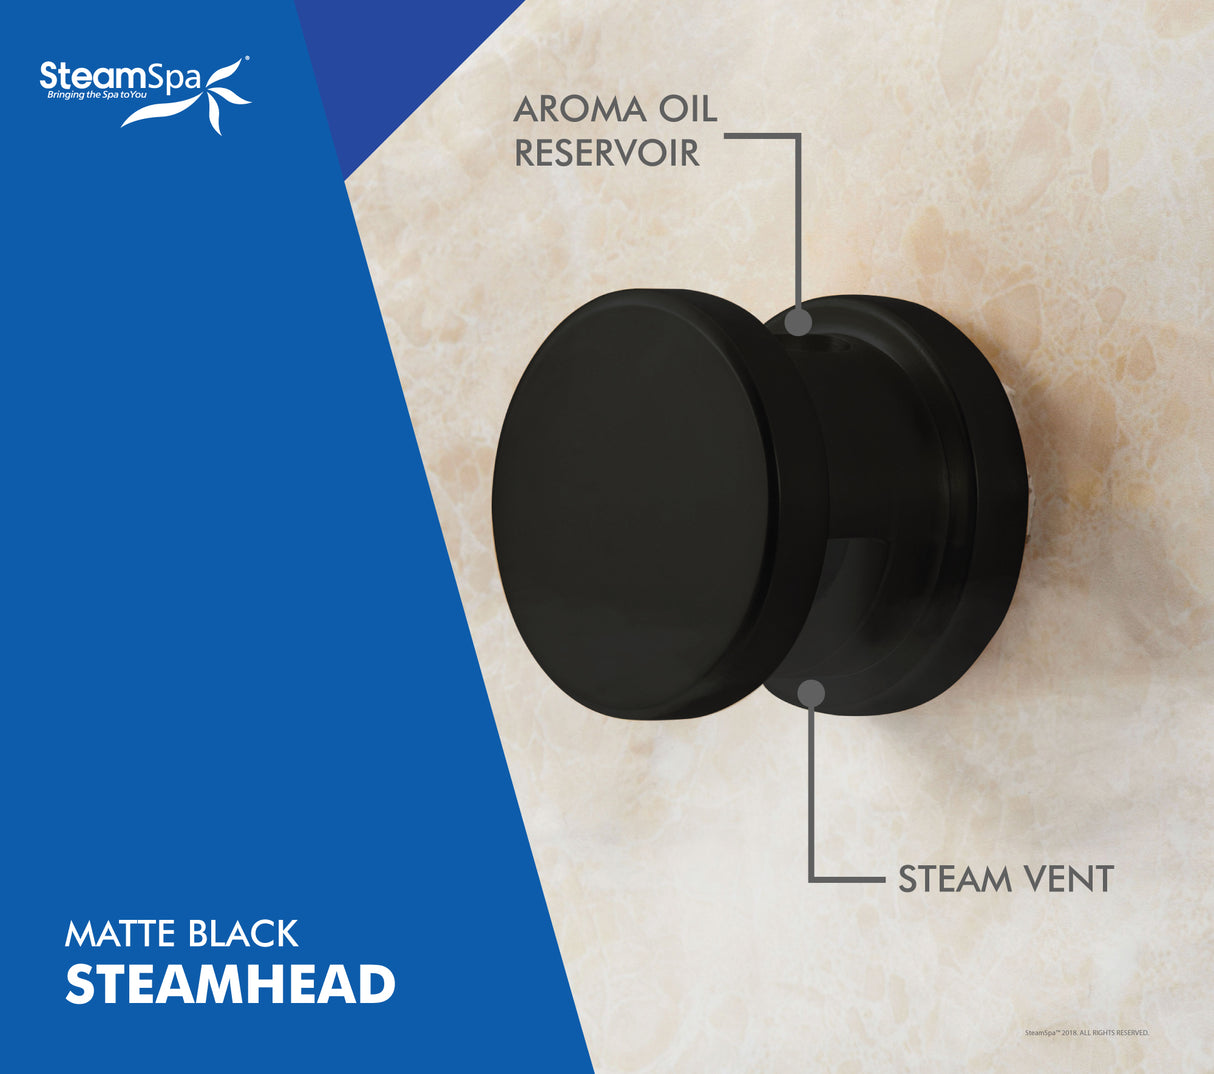 SteamSpa Executive 6 KW QuickStart Acu-Steam Bath Generator Package with Built-in Auto Drain in Matte Black EXR600BK-A